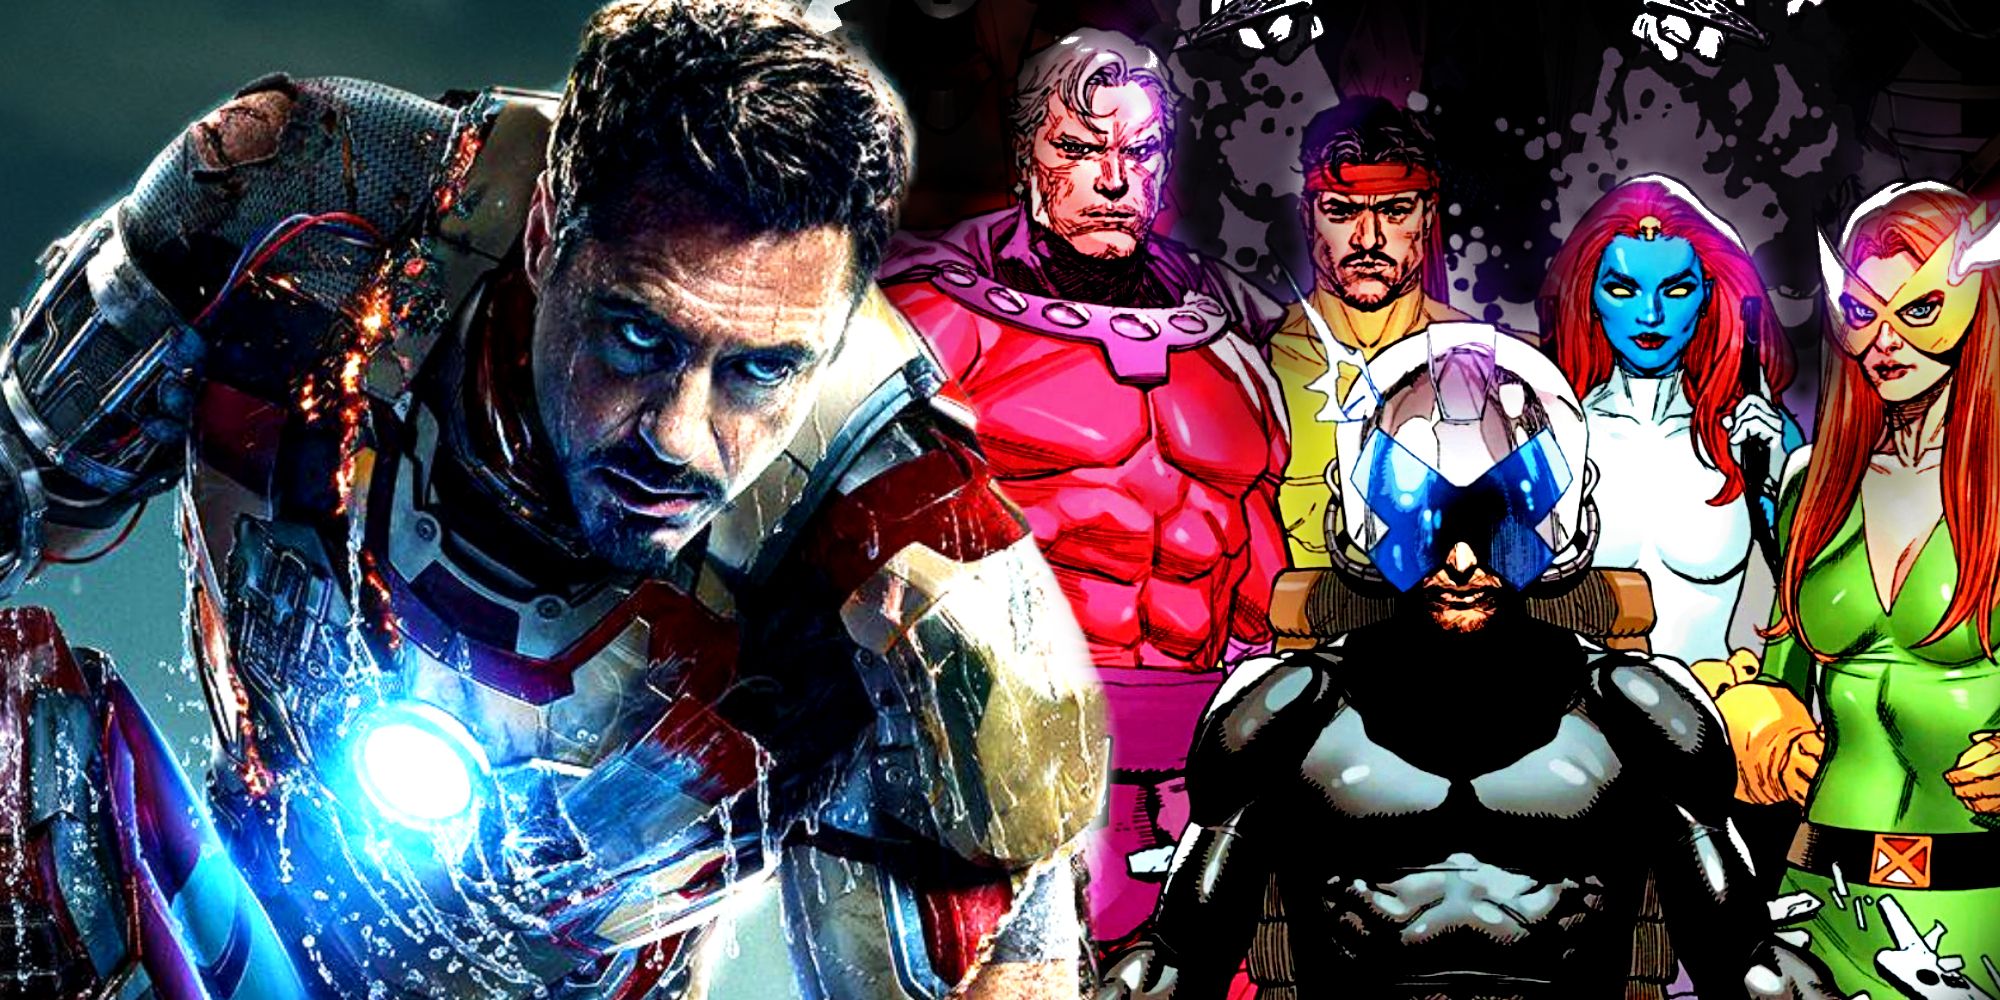 Tony Stark in Iron Man 3 and the X-Men in Marvel Comics